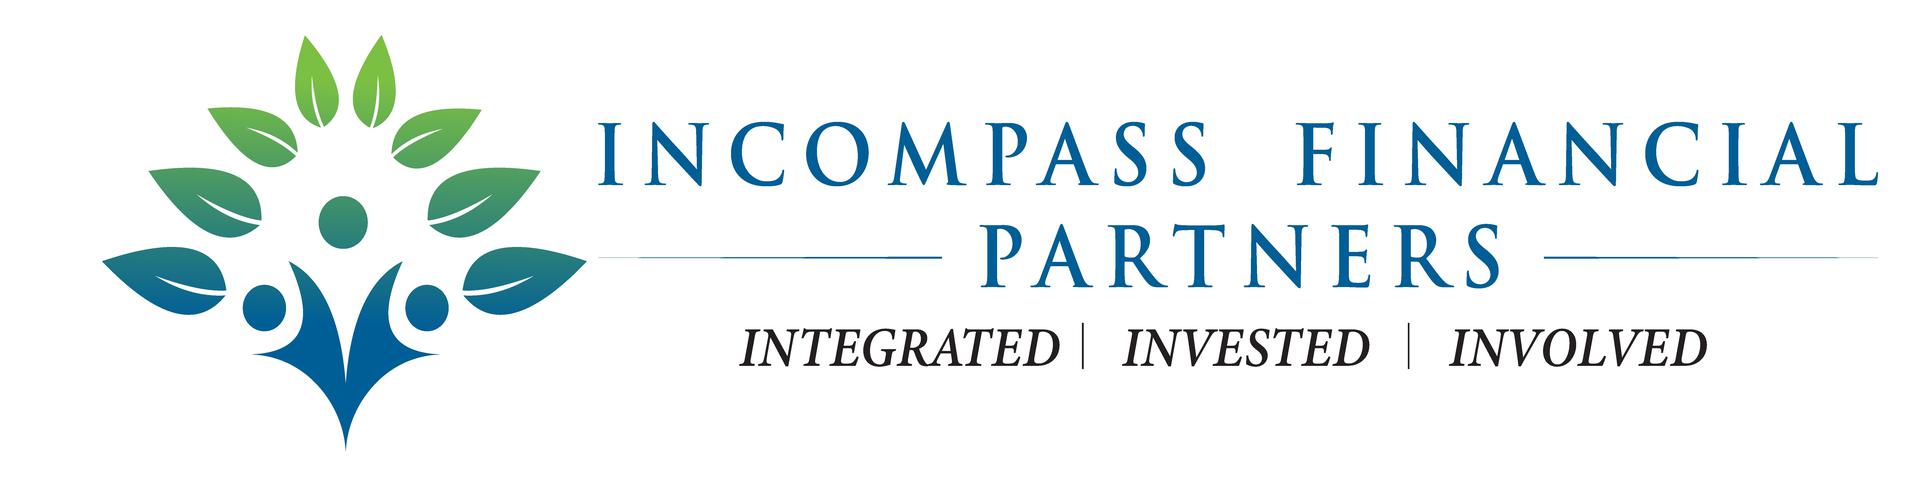 Incompass Financial Partners logo